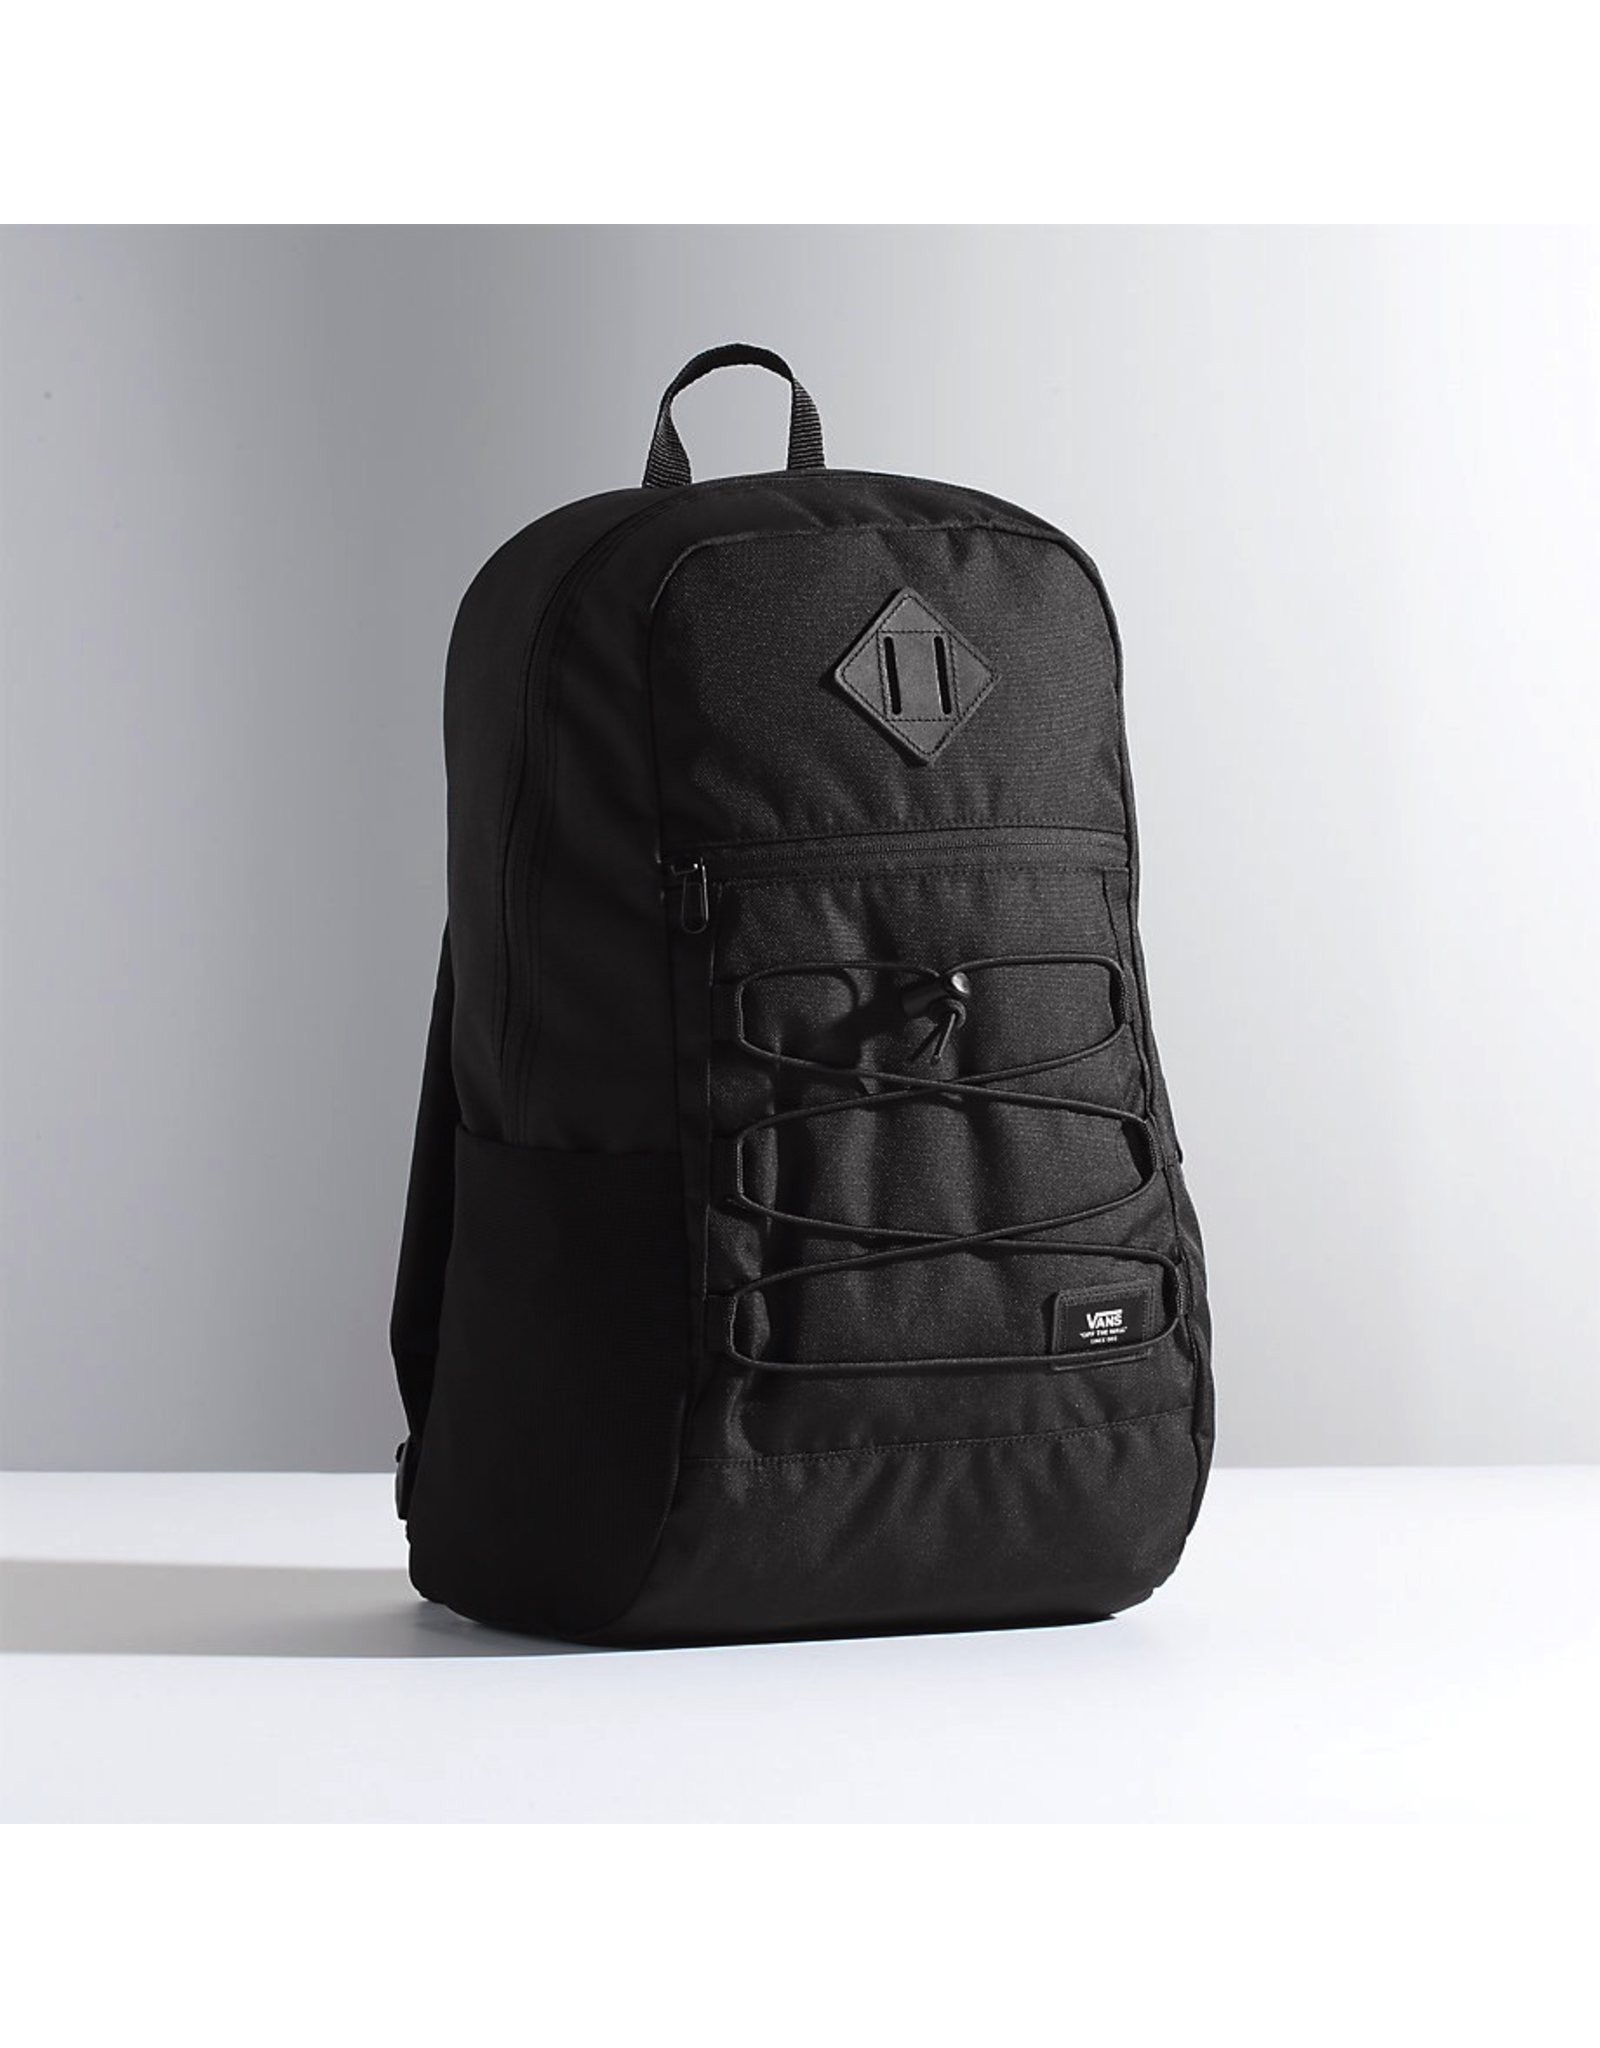 vans leather backpack